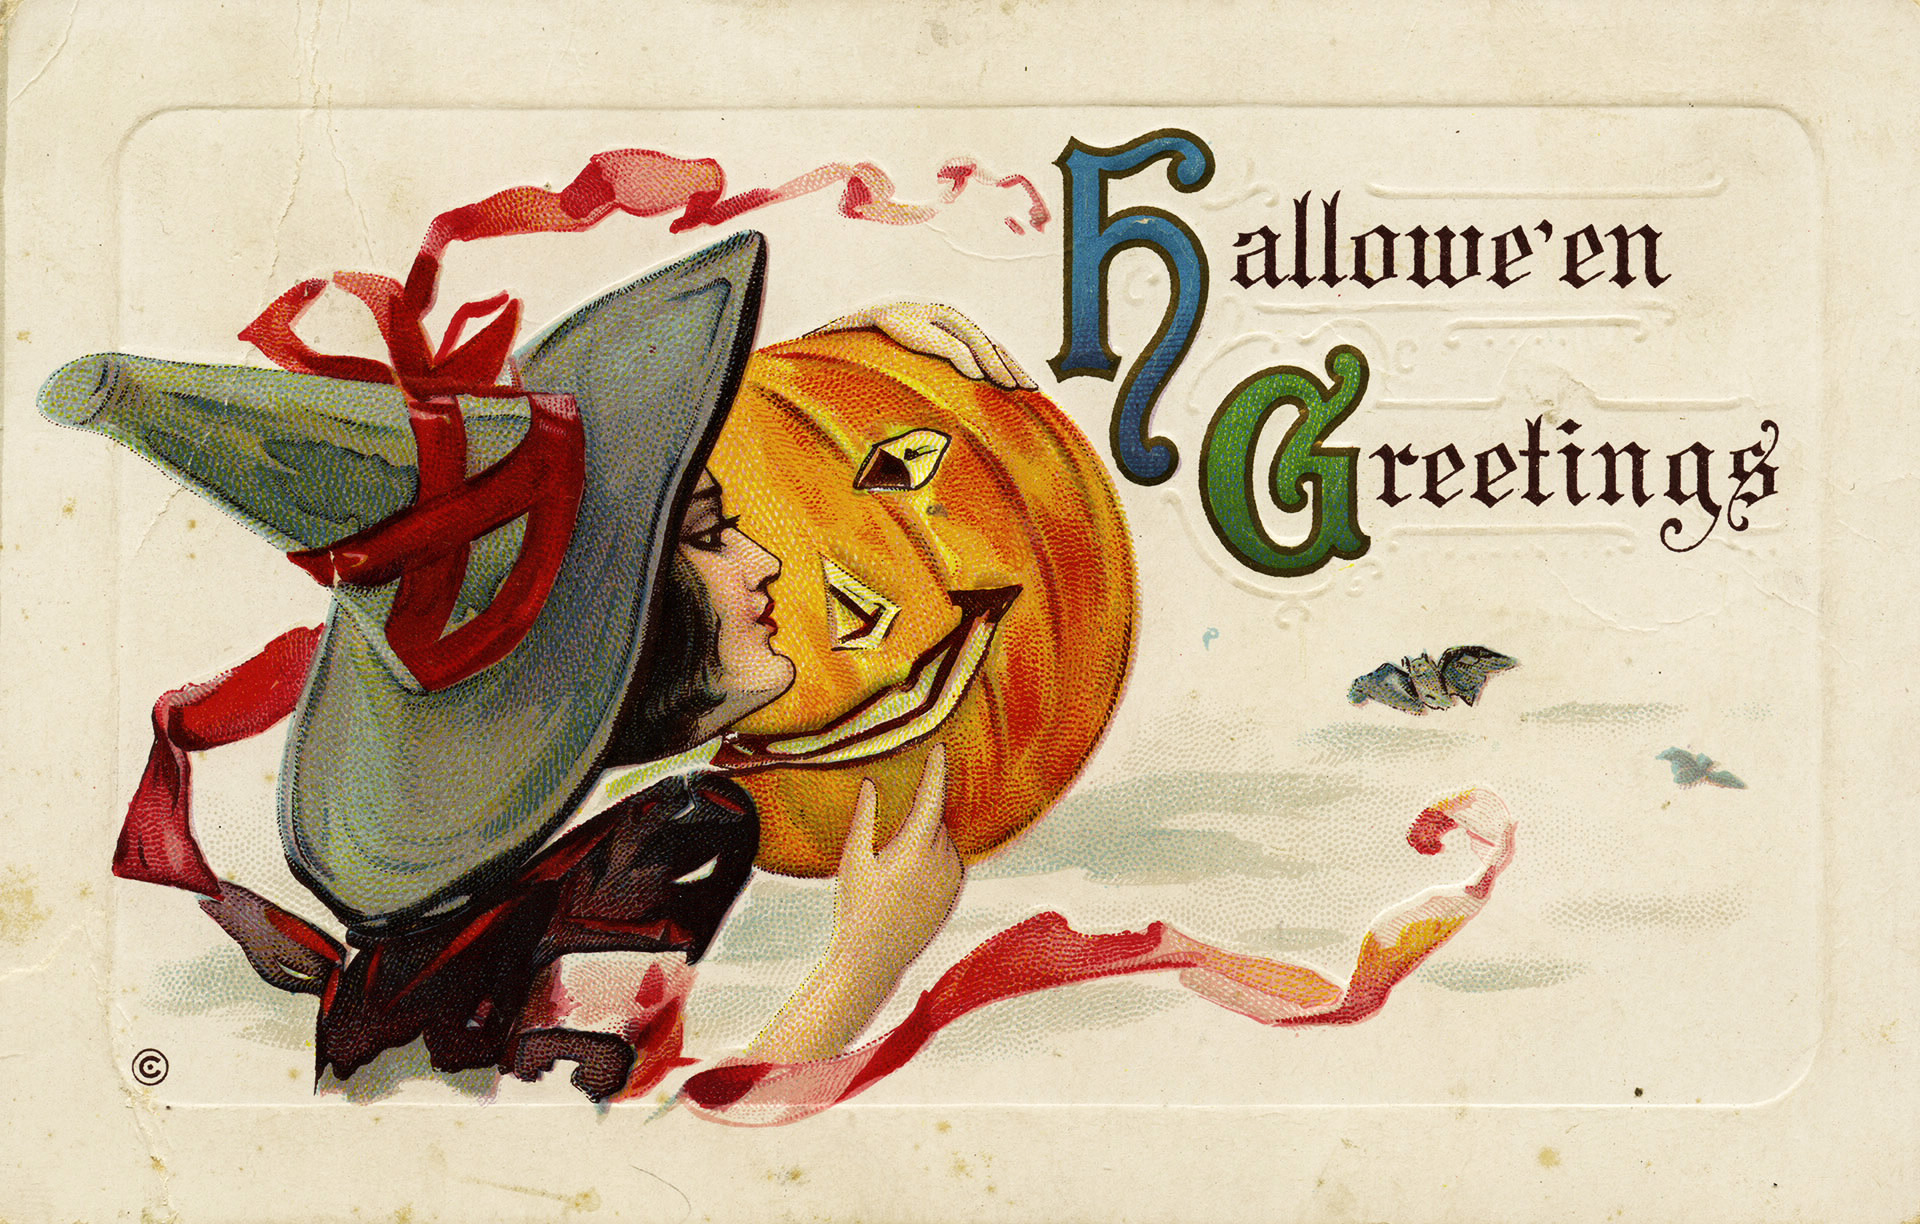 Halloween Holiday Vintage Postcards Printable Download DIY